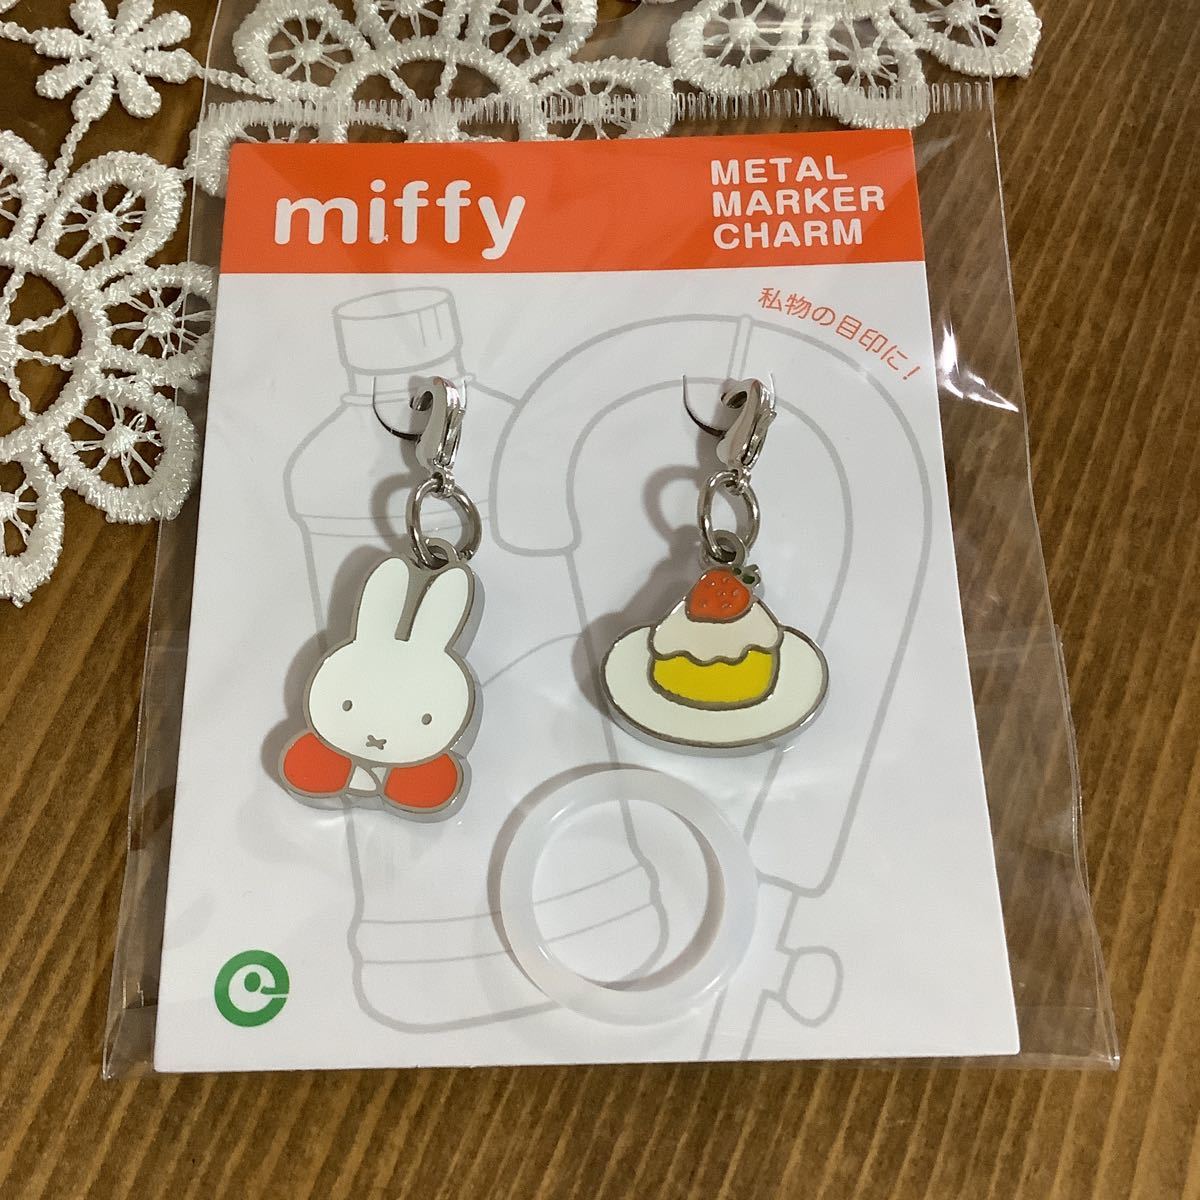  Miffy metal marker charm charm key holder key ring postage 120 new goods cake 